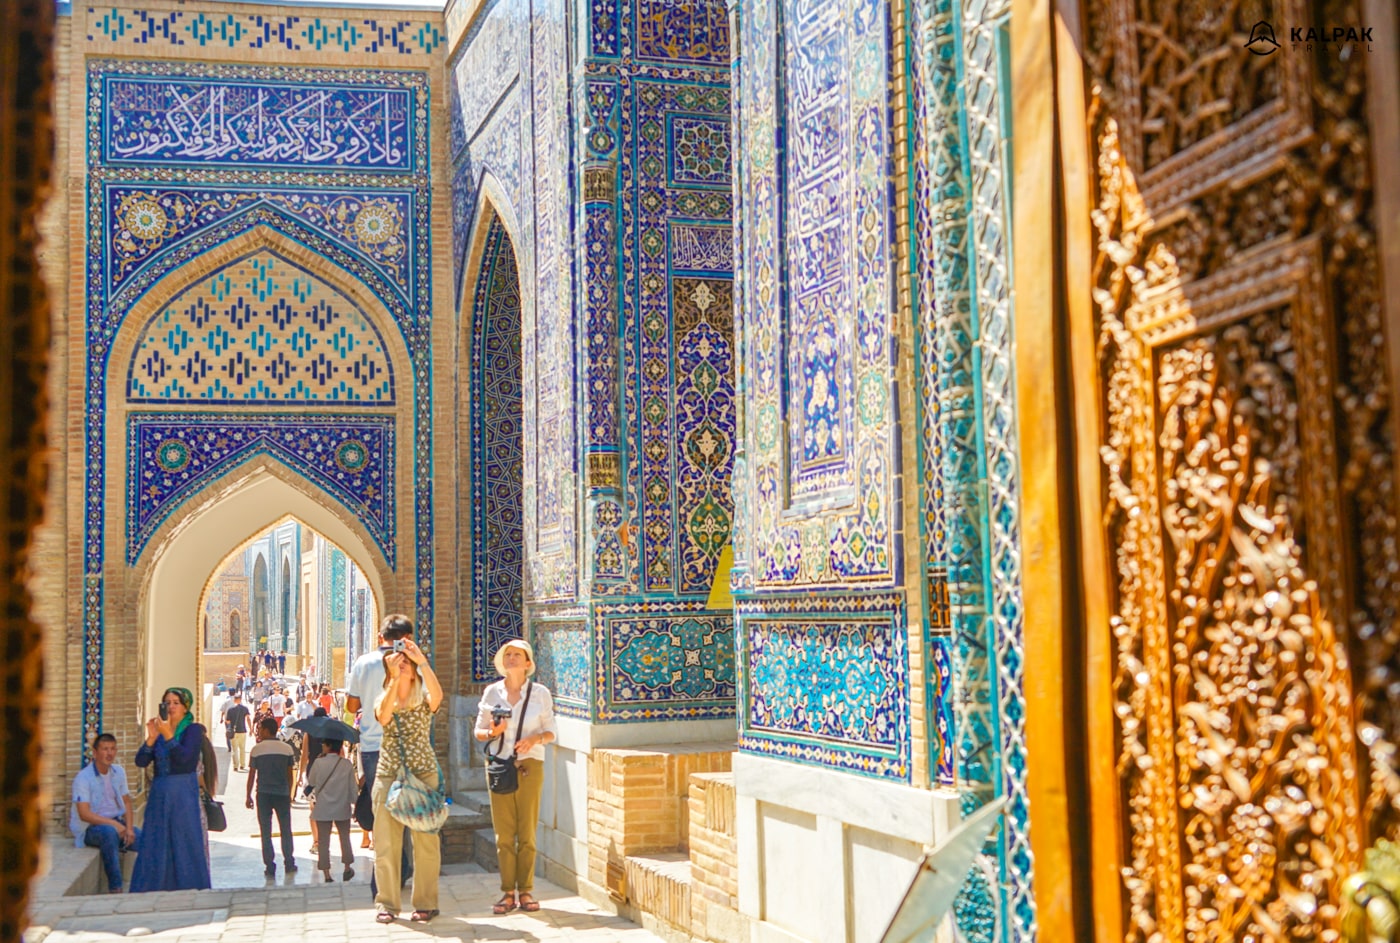 Shahizinda Samarkand in Uzbekistan